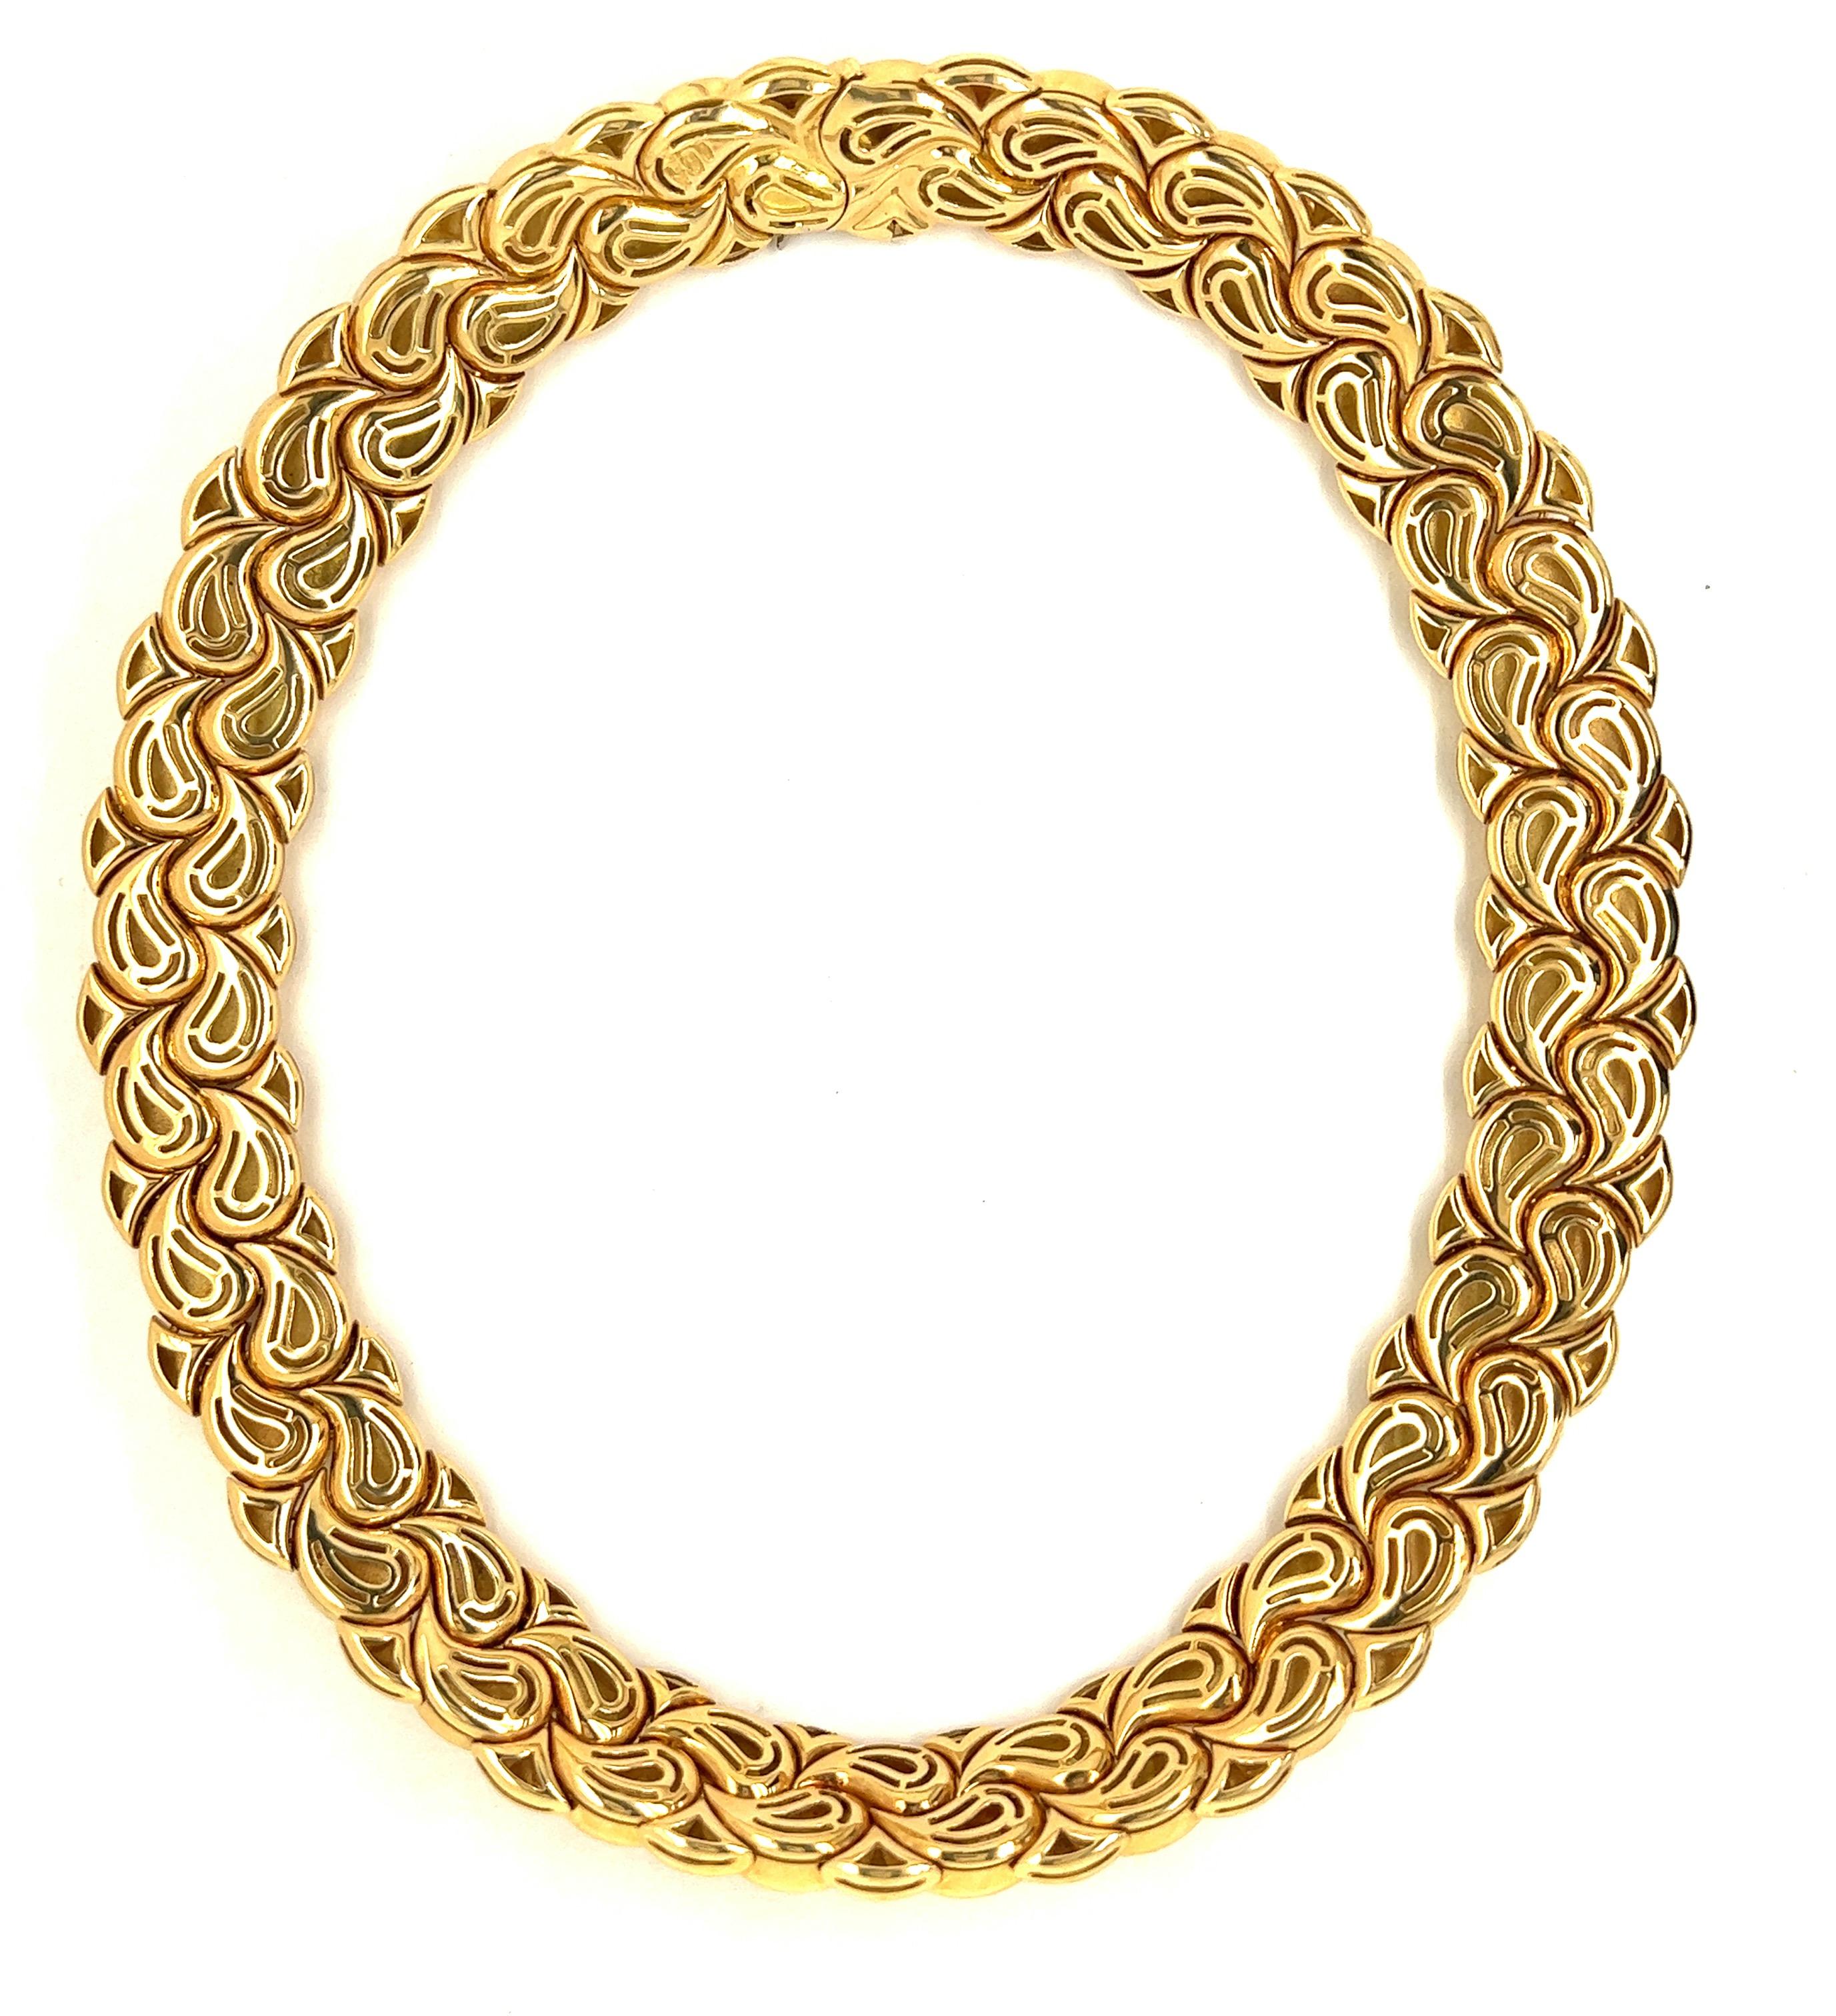 Chopard 18k rose gold teardrop link motif necklace. Measuring 16